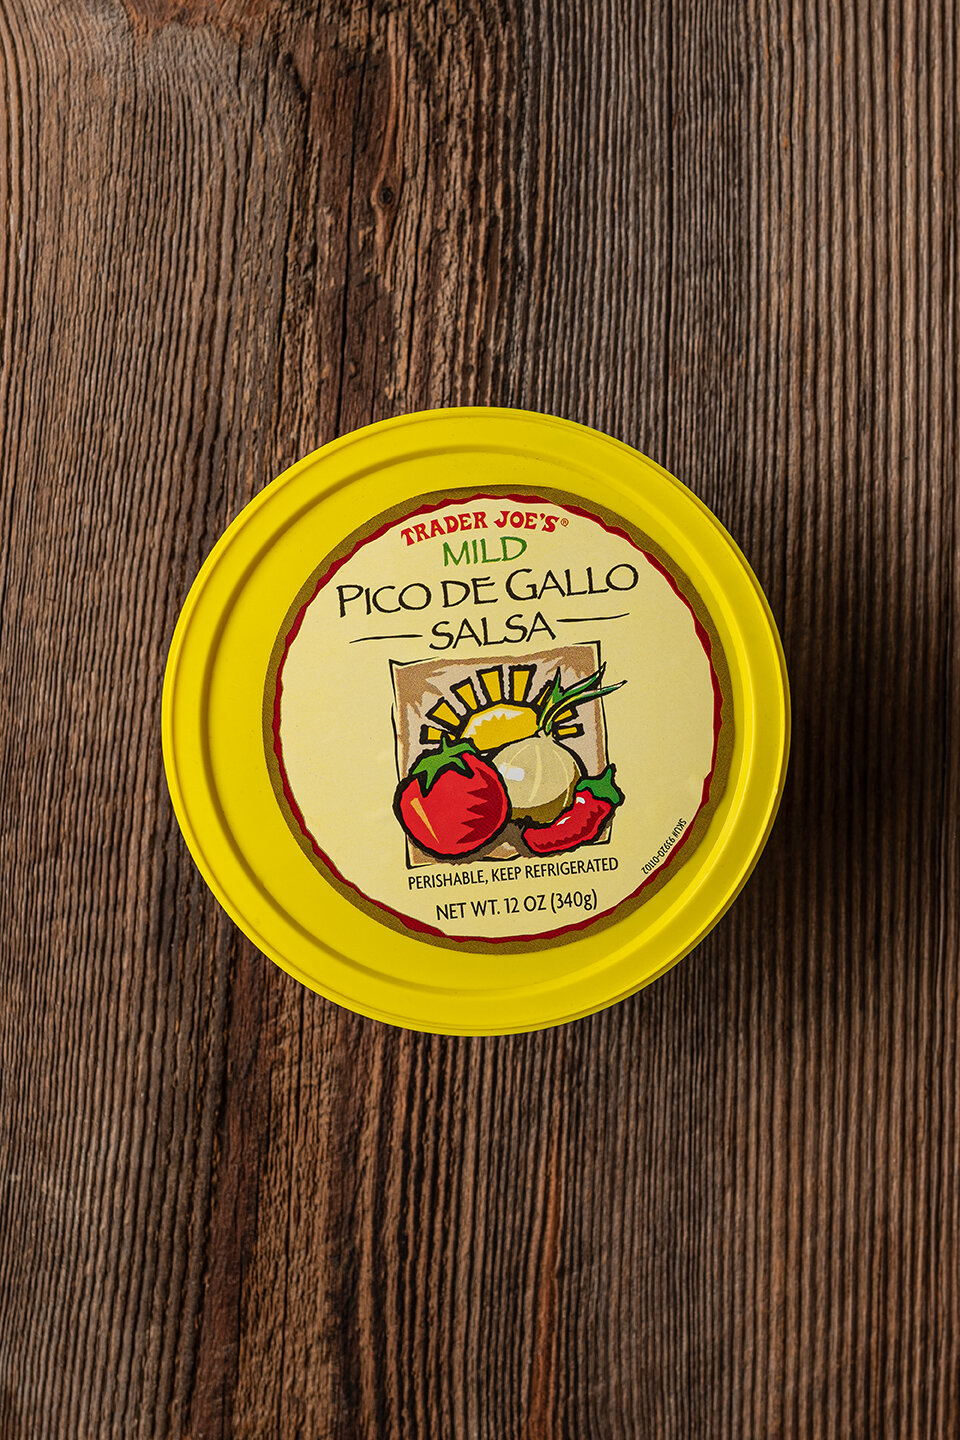 Mild Pico De Gallo Salsa $2.99